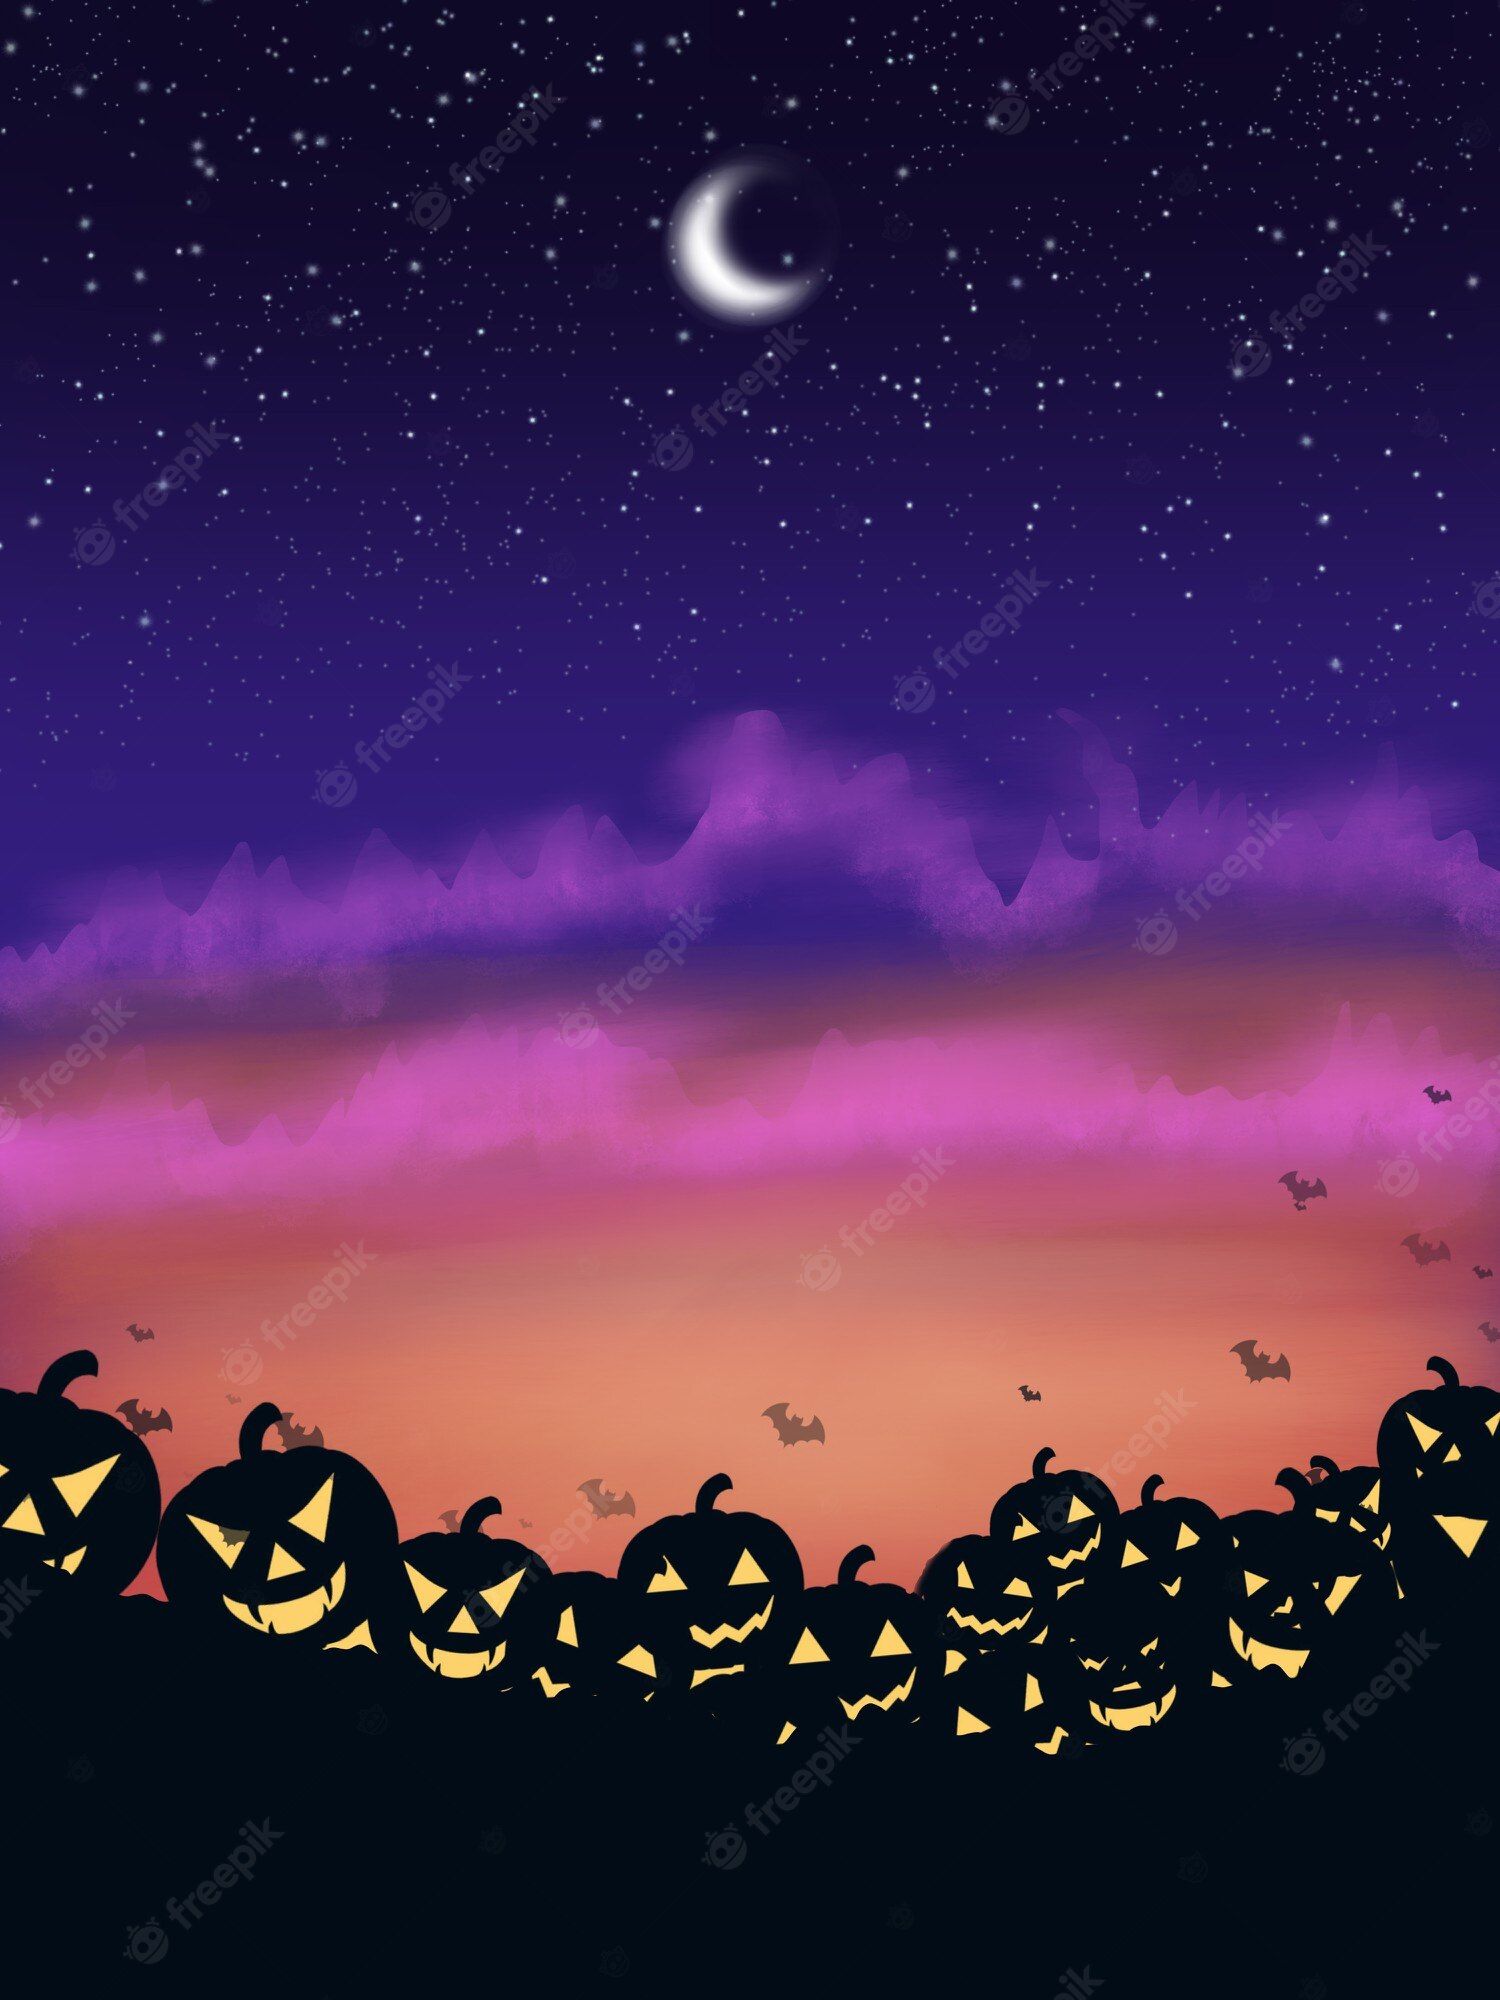 Halloween background with pumpkins under the moonlight - Creepy